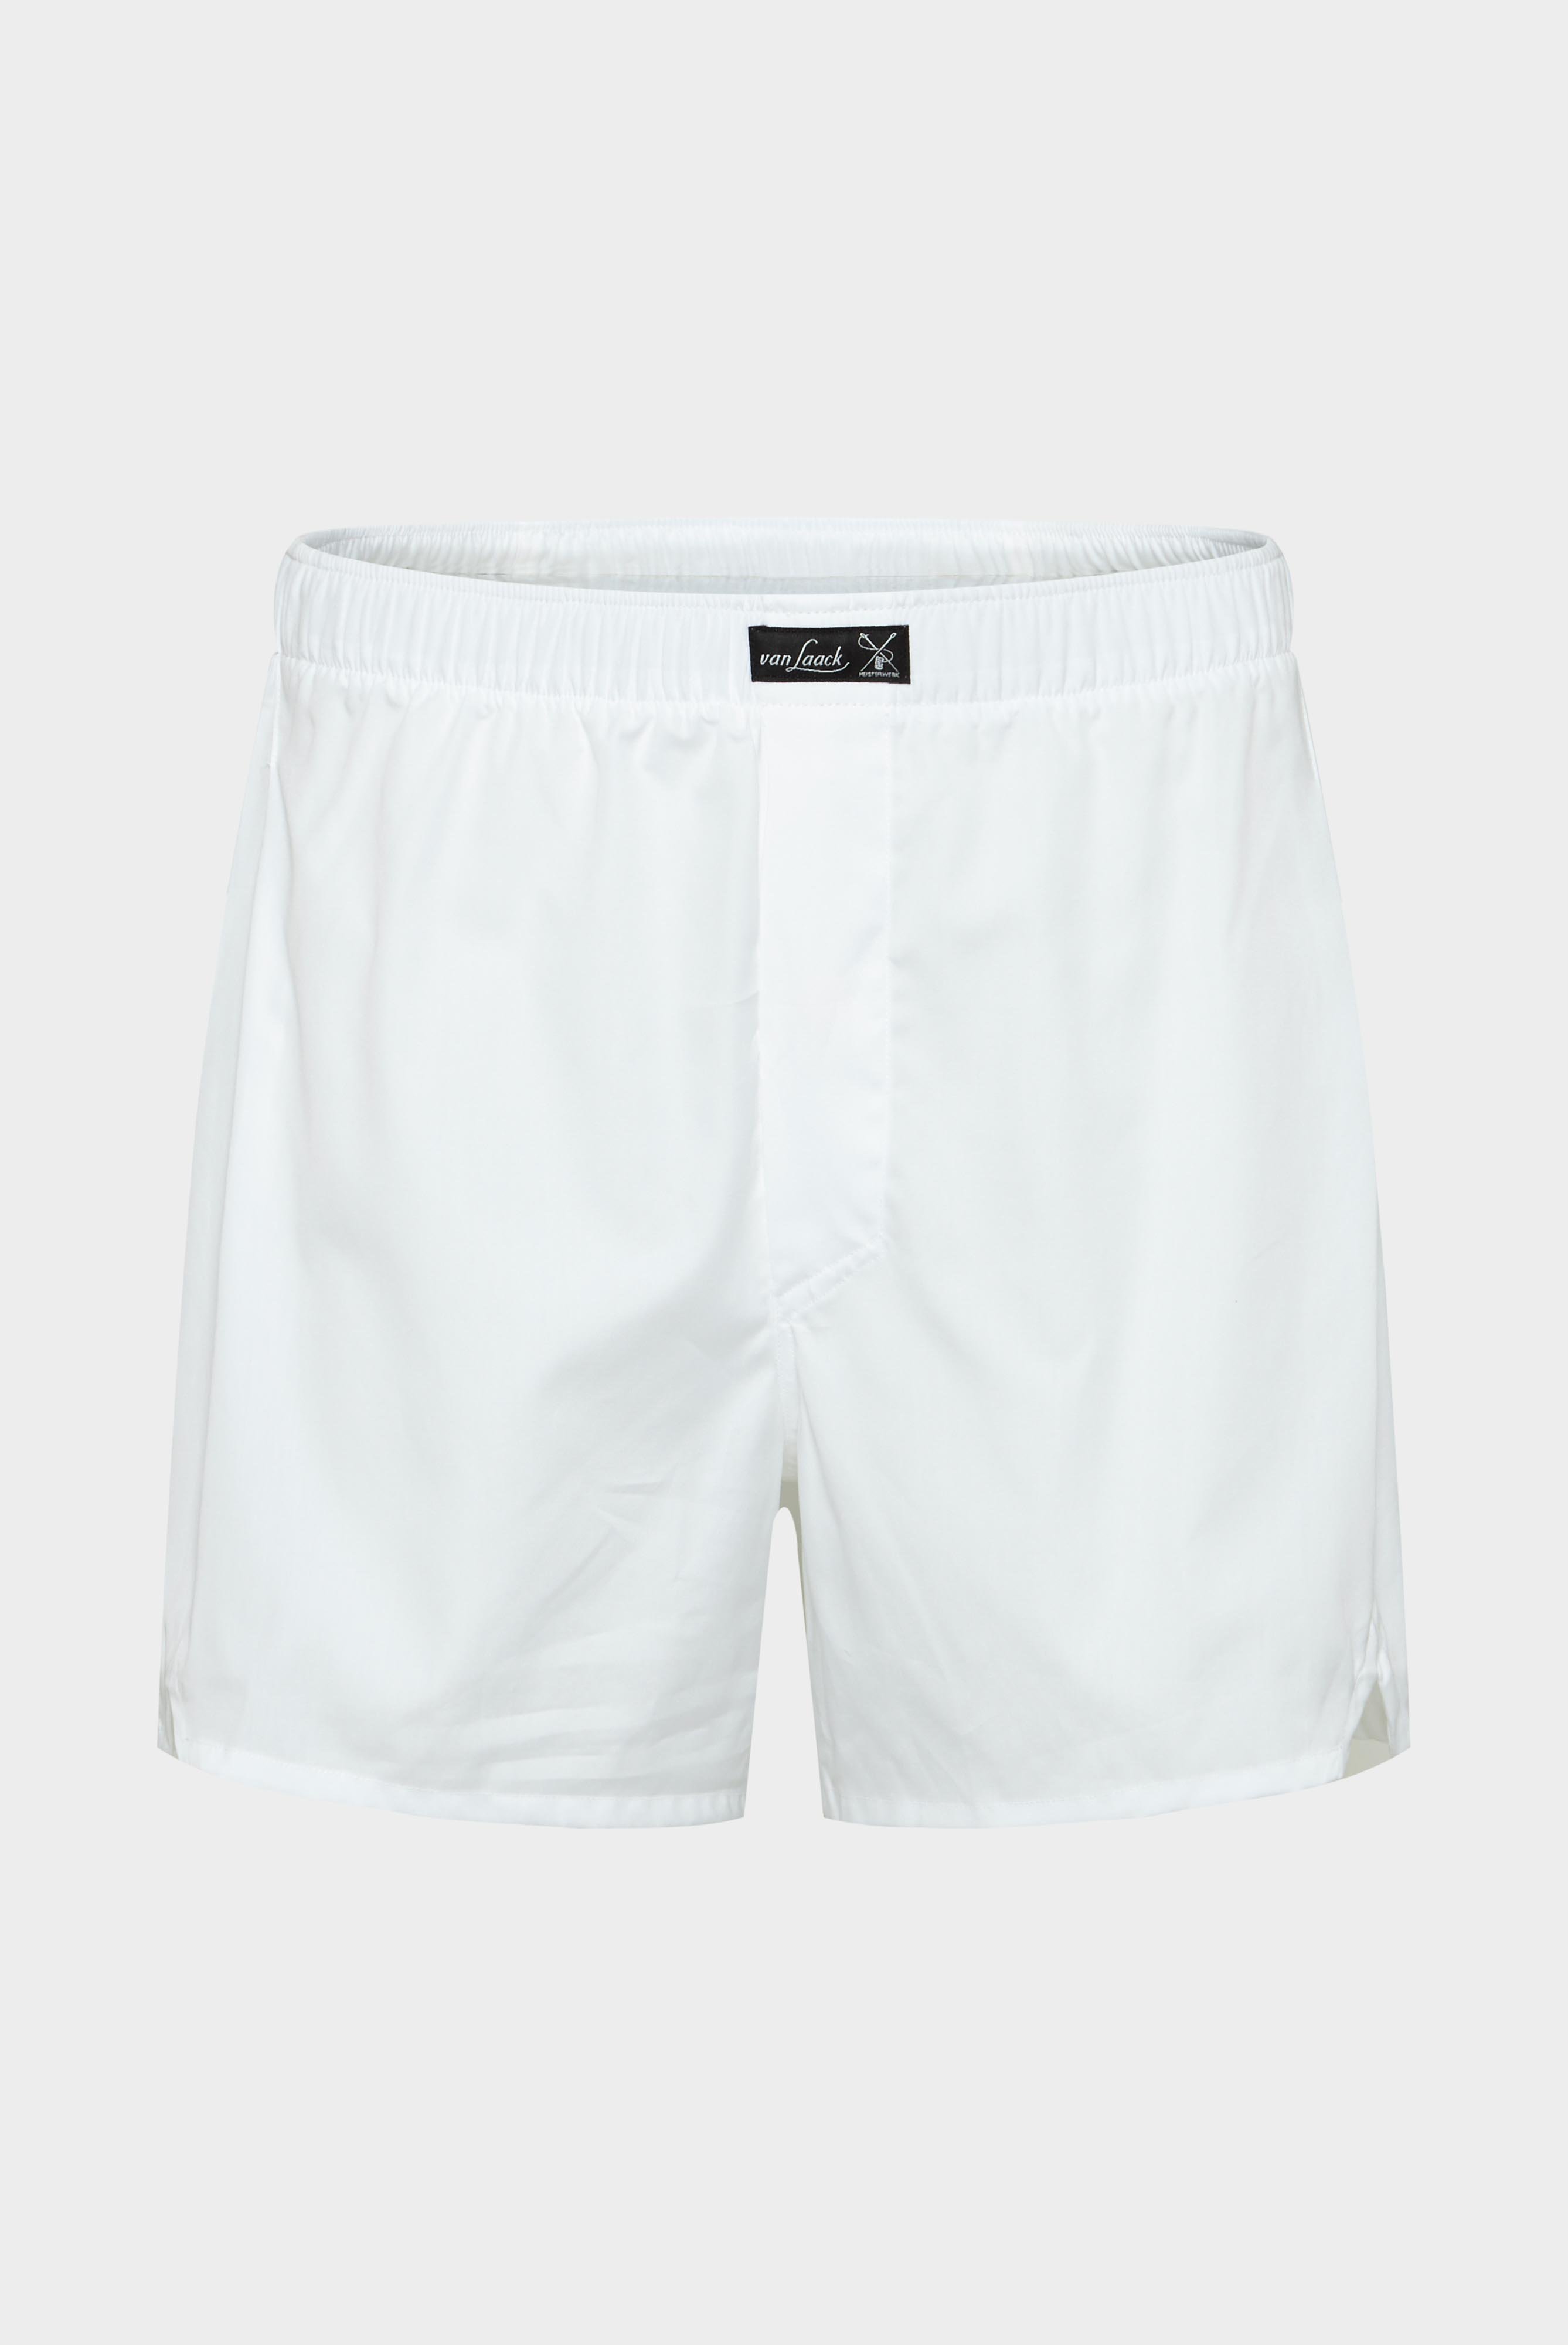 Underwear+Fil-a-Fil Boxer Shorts+91.1100..140766.000.46